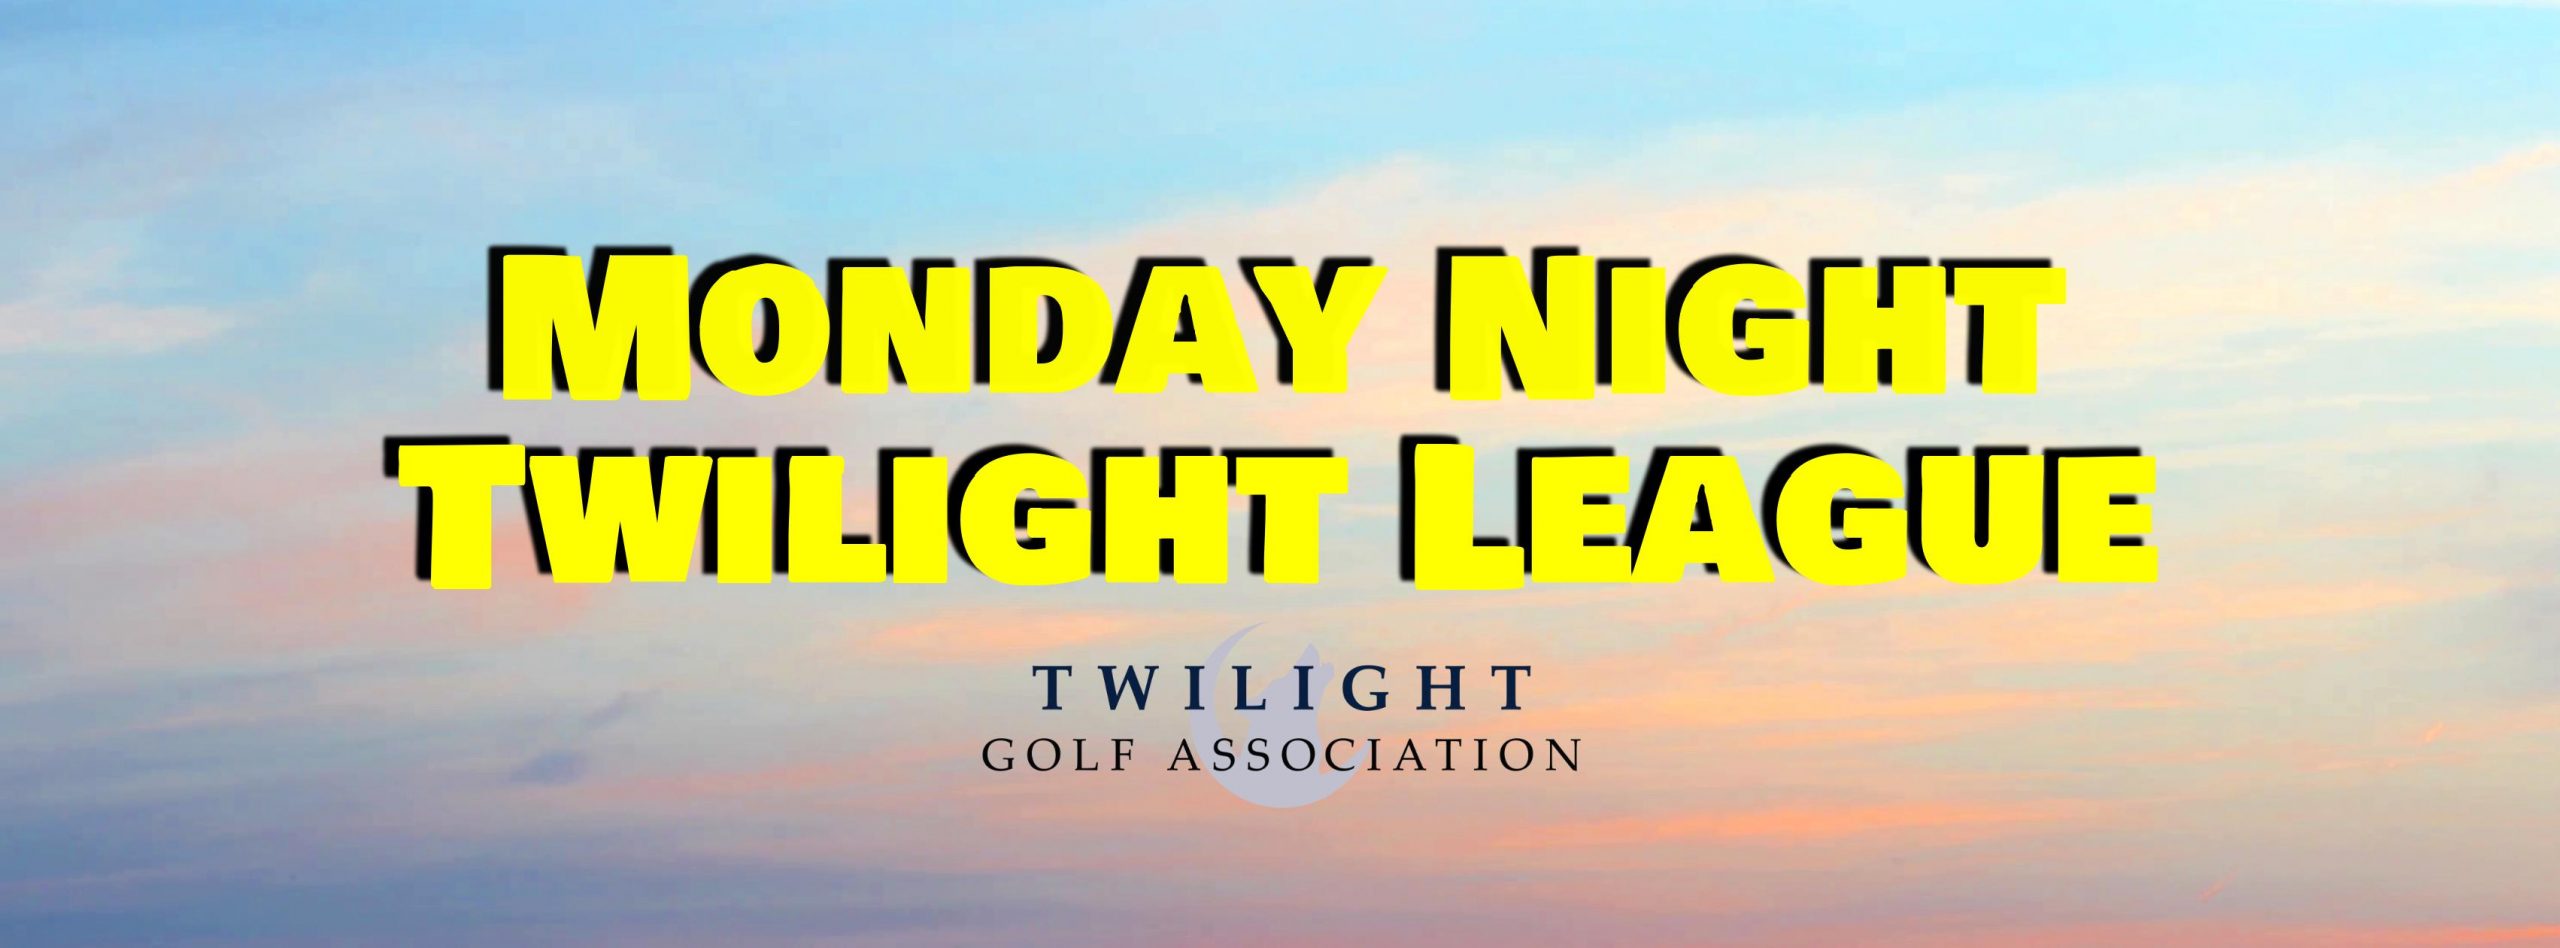 Monday Night Twilight League at Grand View Golf Club